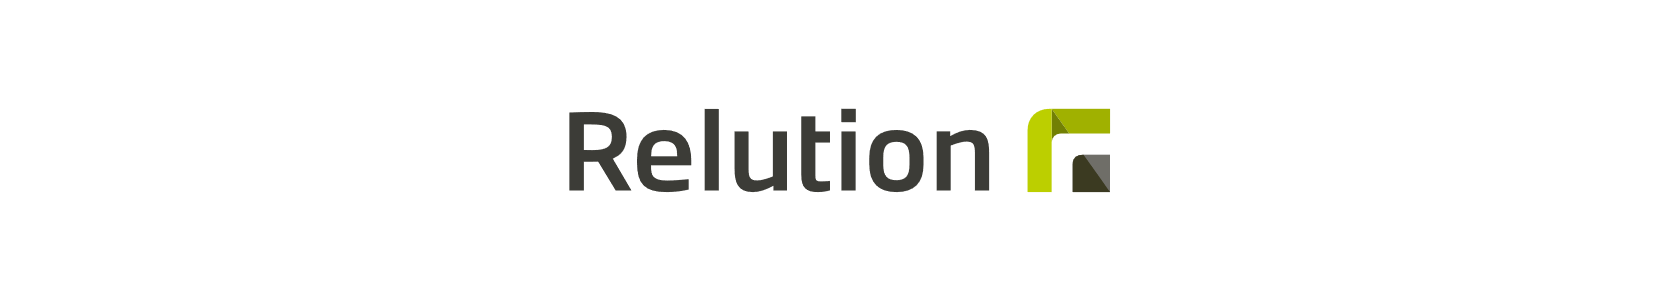 Relution_Logo_Segel_RZ(0)